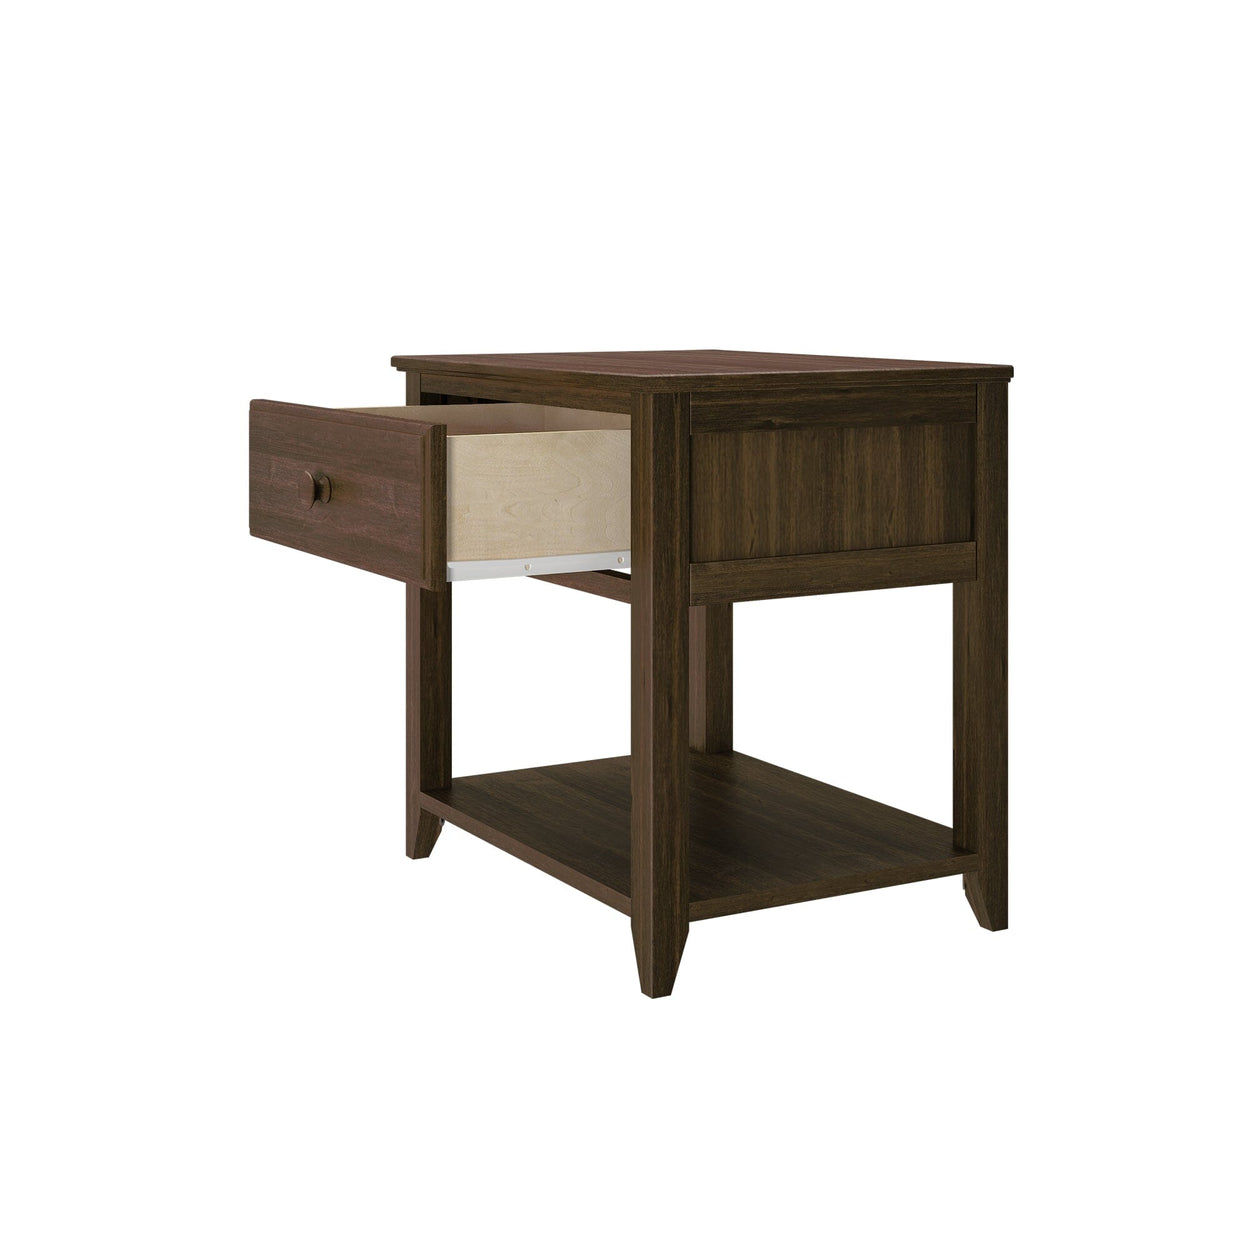 180001-008 : Furniture Nightstand with Drawer and Shelf, Walnut